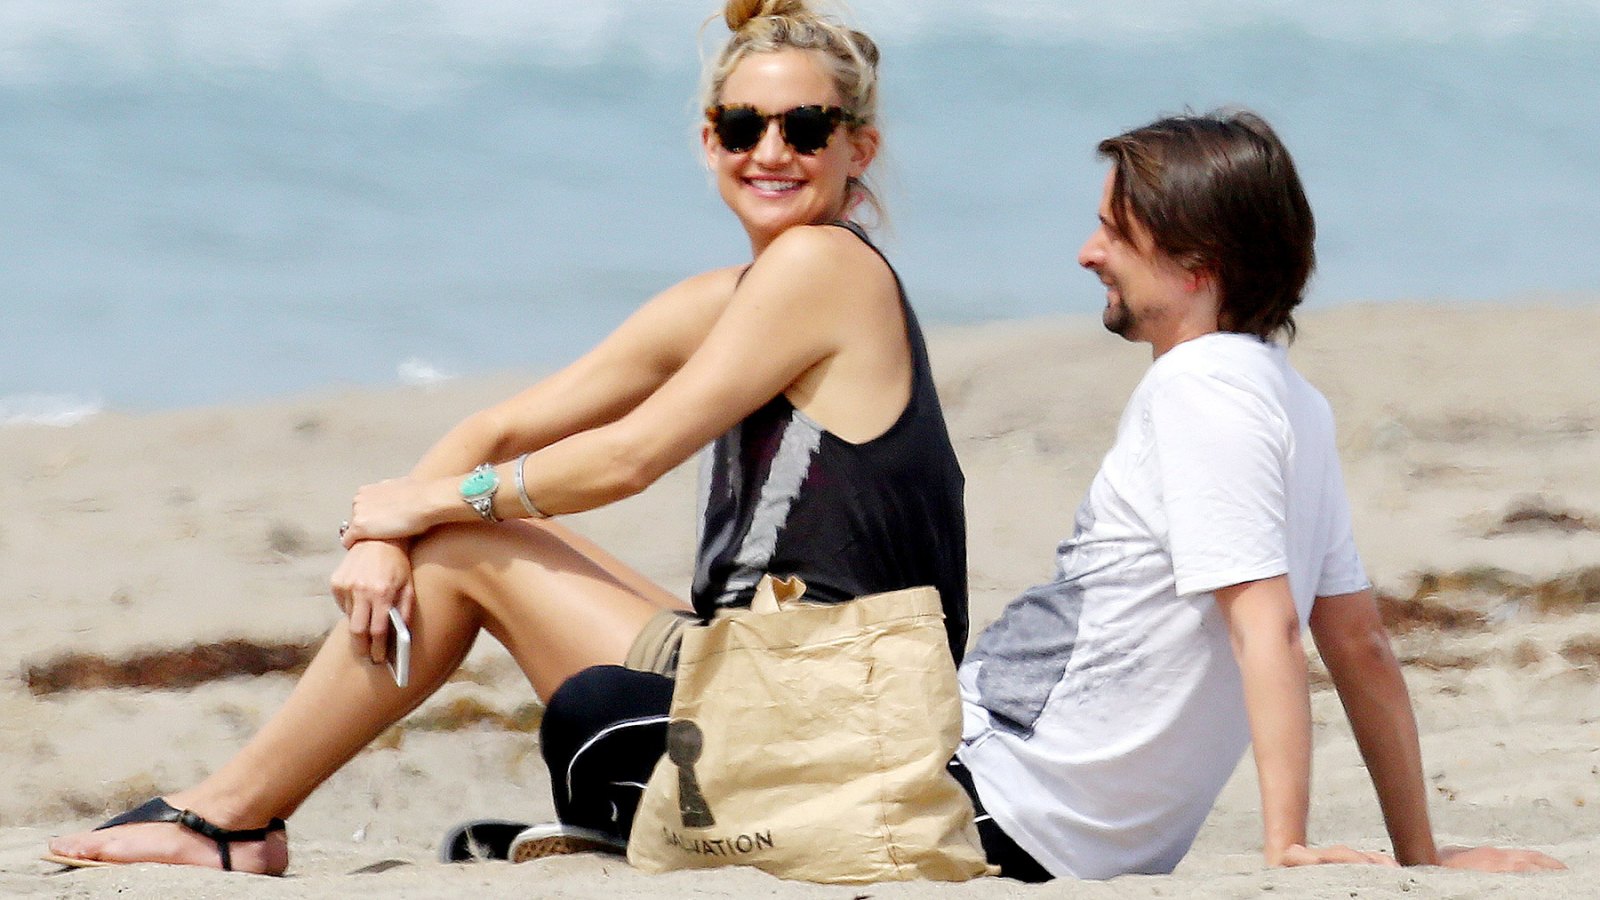 Kate Hudson & Matthew Bellamy in Malibu, California on March 29, 2014